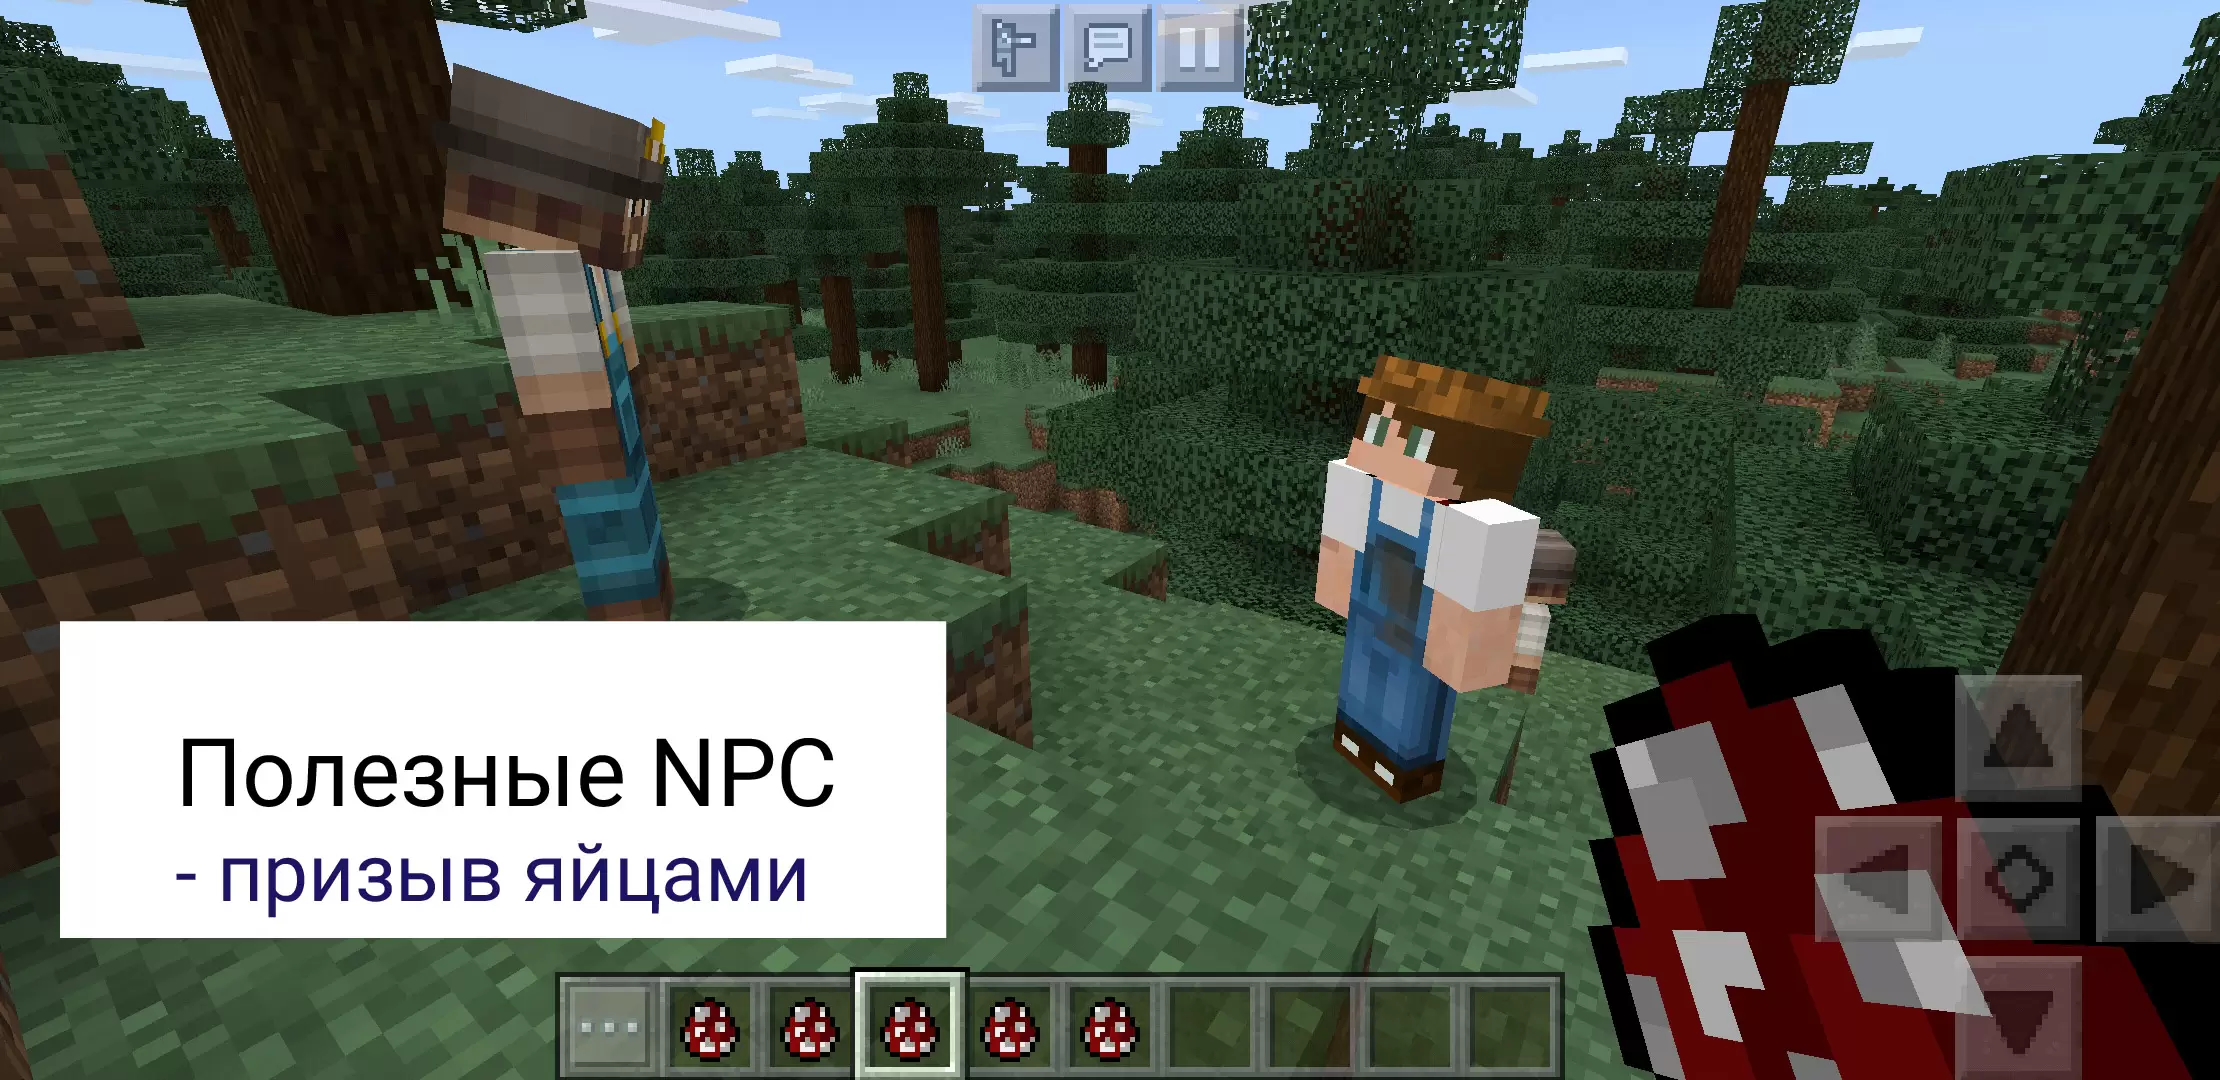 Minecraft PE- യ്ക്കുള്ള മോഡിൽ ഉപയോഗപ്രദമായ NPC- കൾ